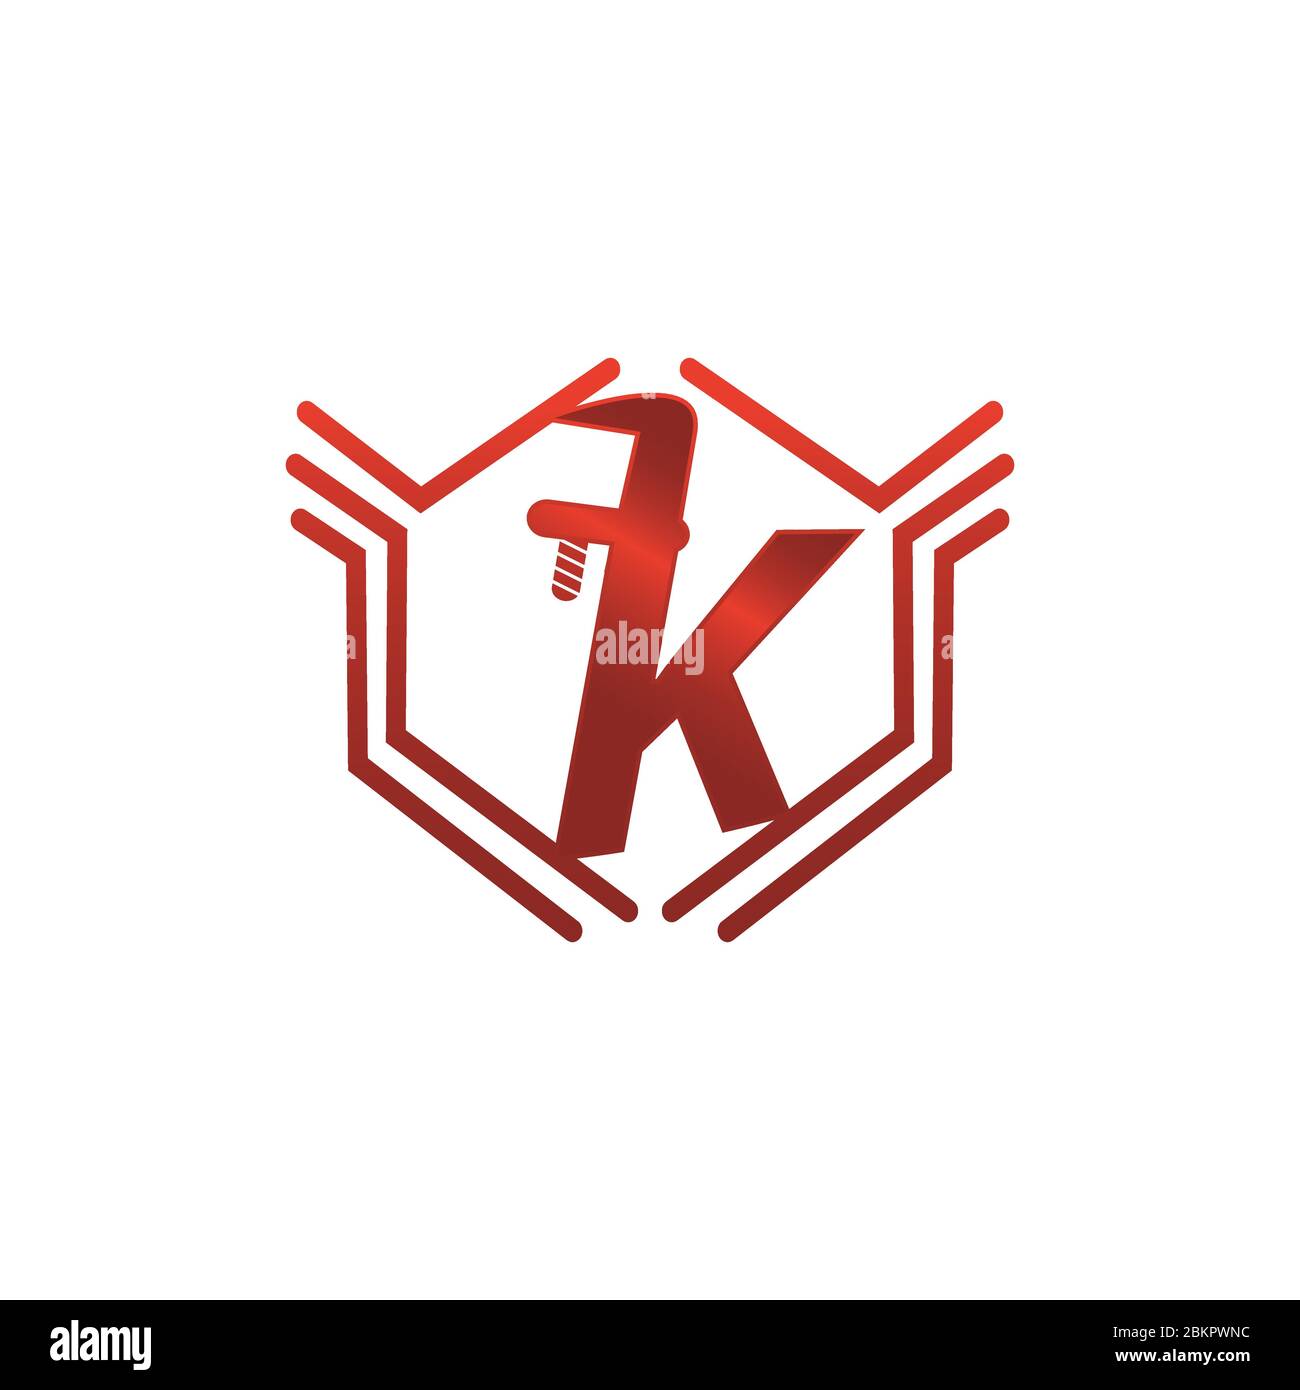 Letter K logo icon design template elements, Minimal vector graphic alphabet symbol Stock Vector